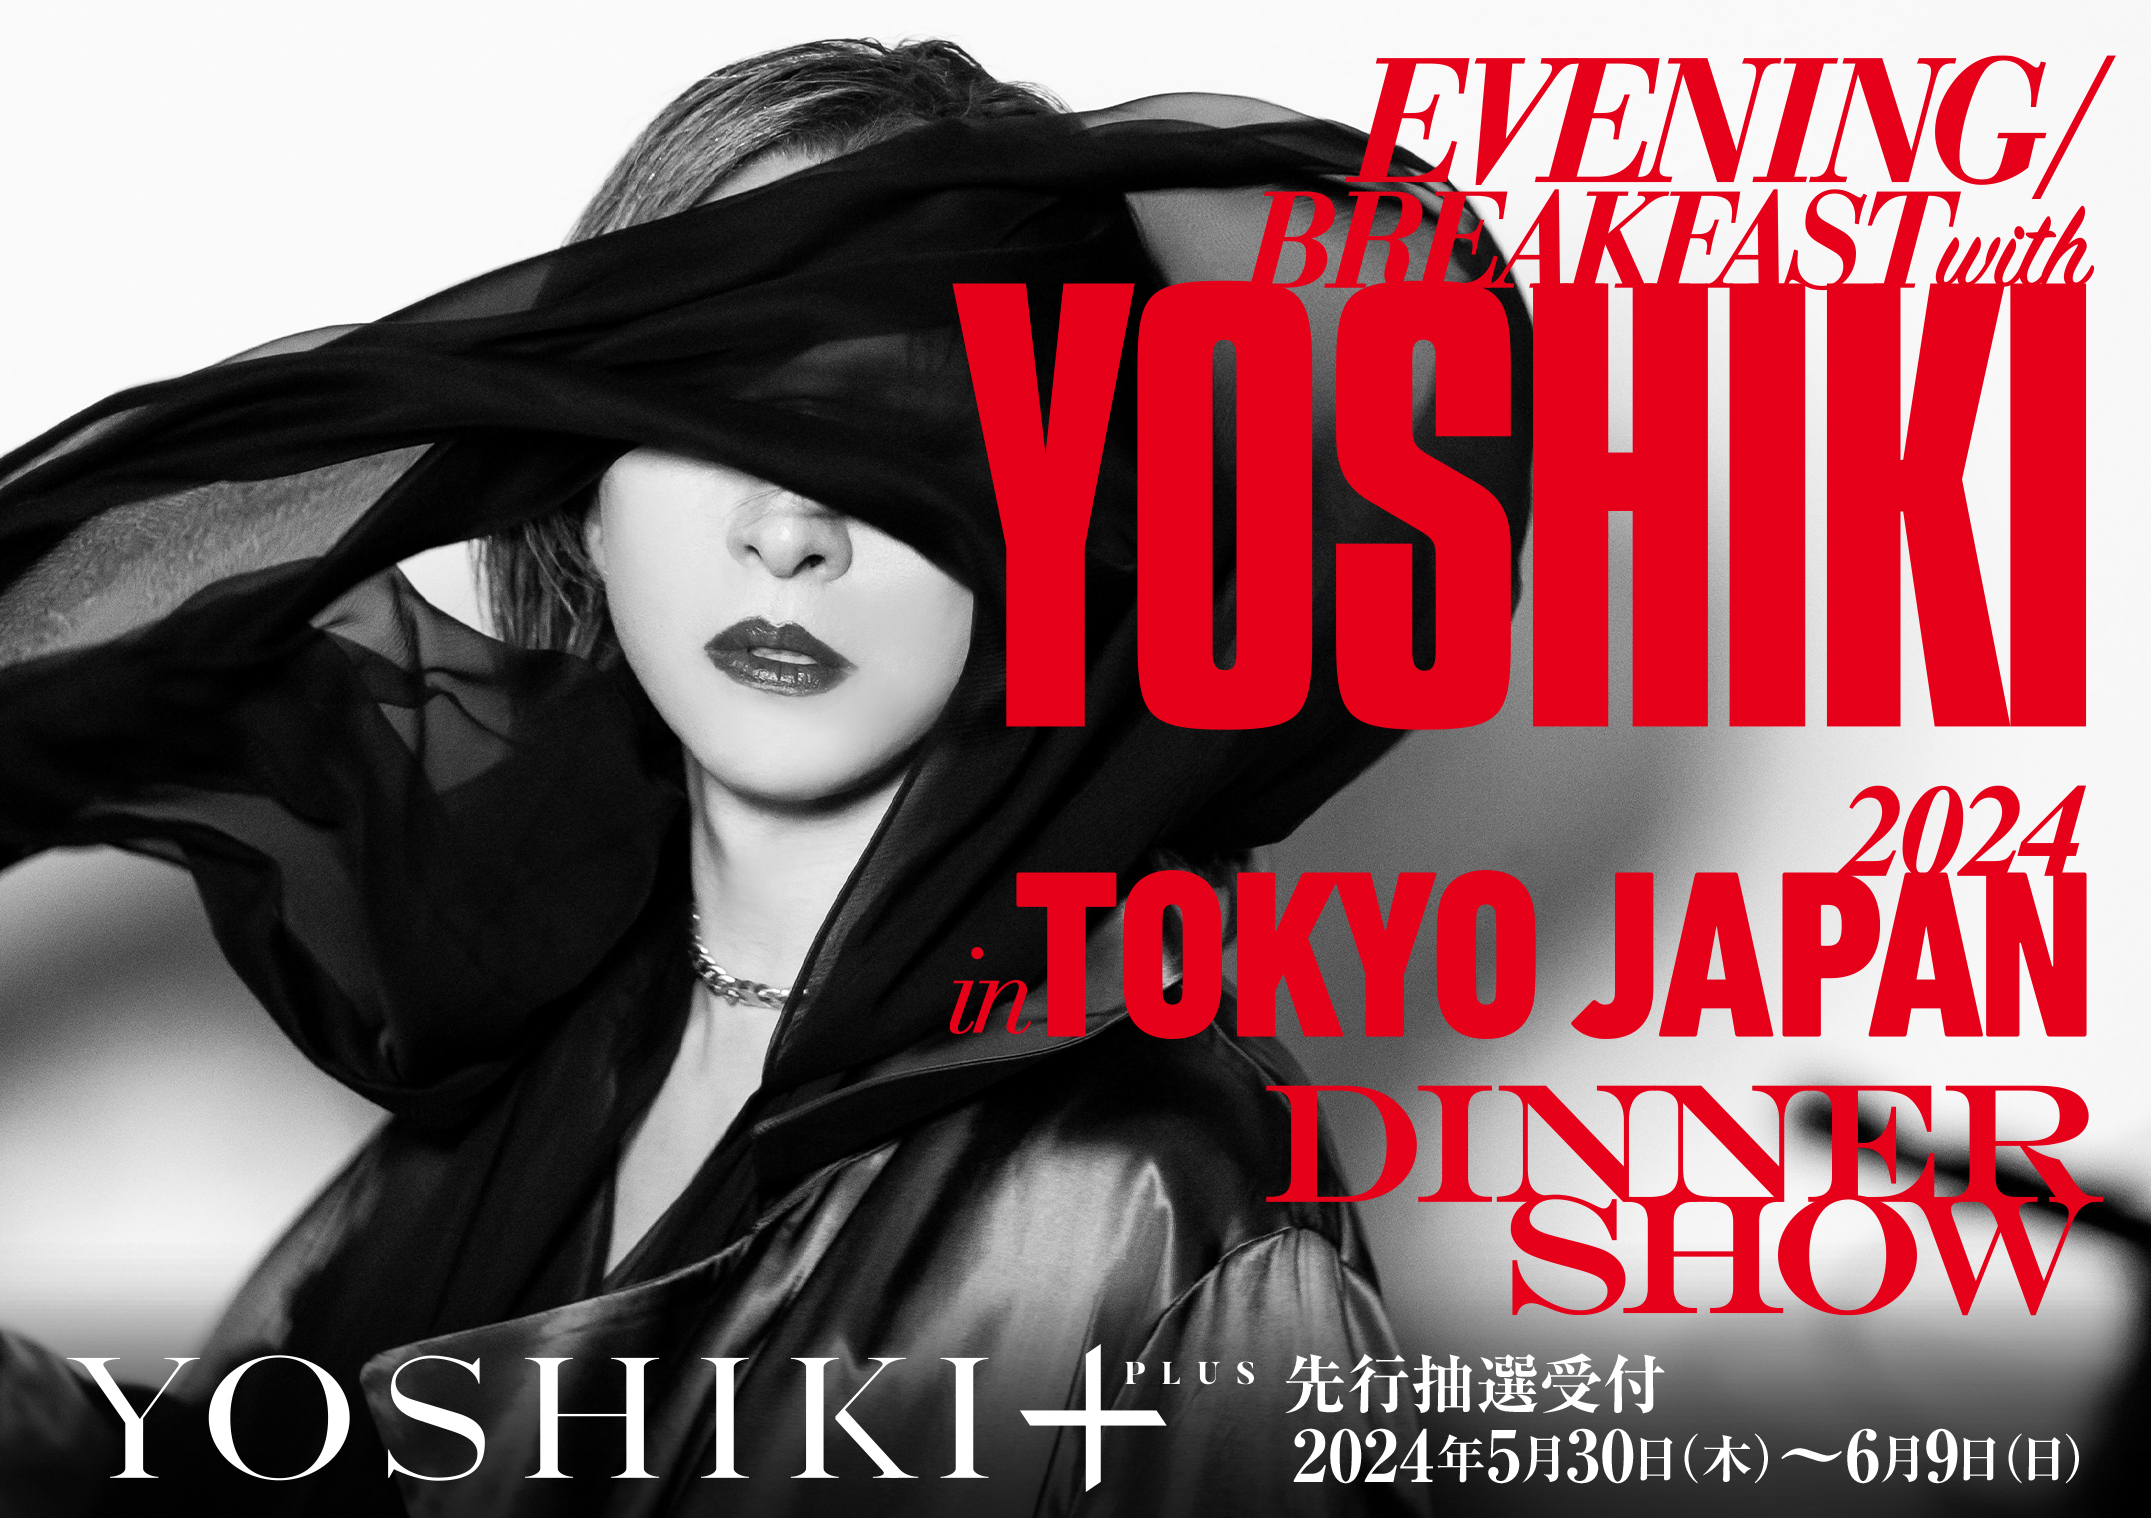 「YOSHIKI+(PLUS)」”革新的”新ファンコミュニティが7月1日サービス開始　ディナーショーチケット先行受付スタート　22年続いた「YOSHIKI mobile」は8月末に終了のサブ画像1